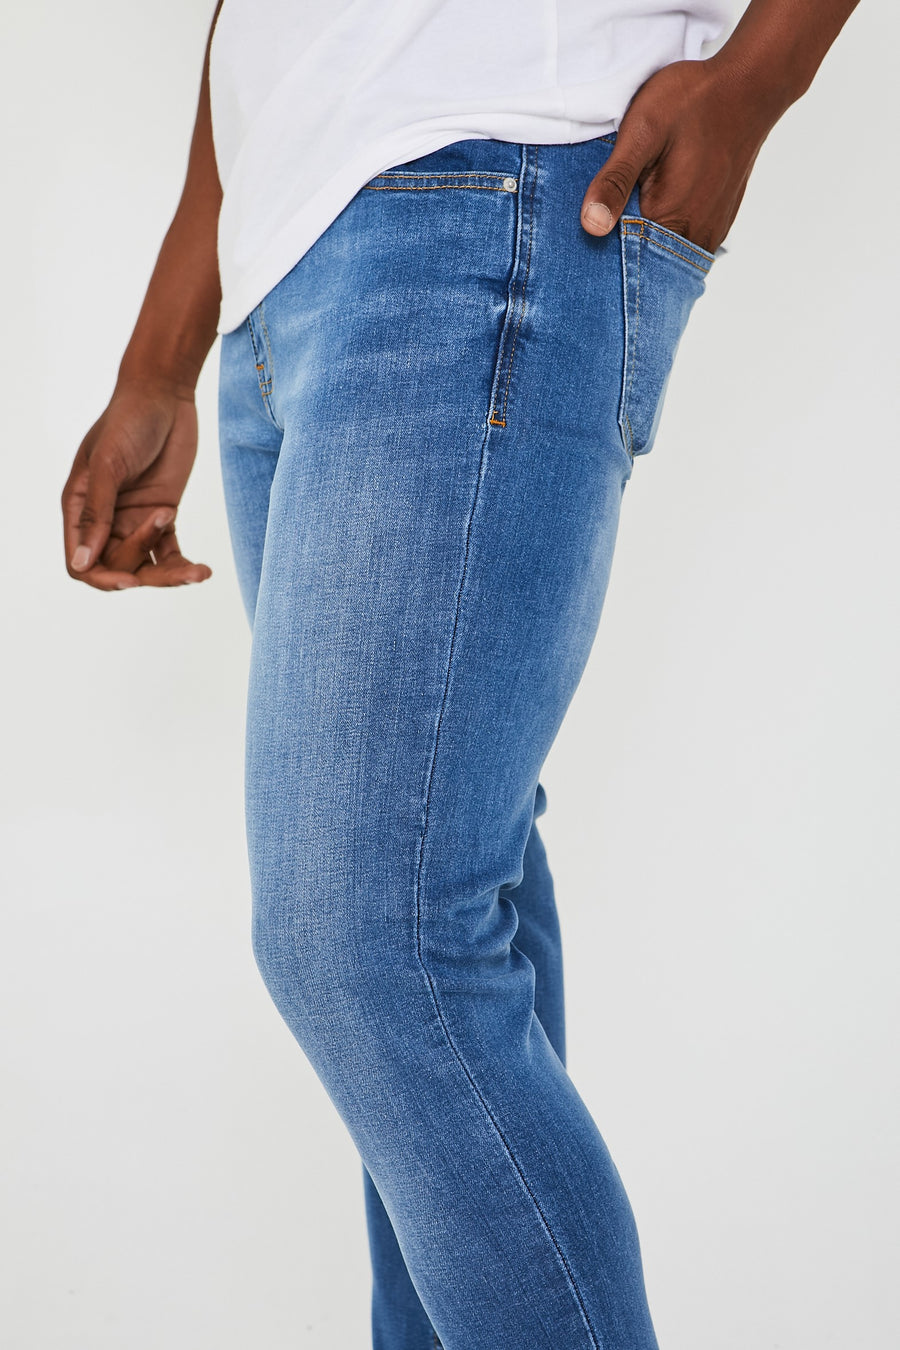 Just Organic Skinny Jeans - Mid Blue